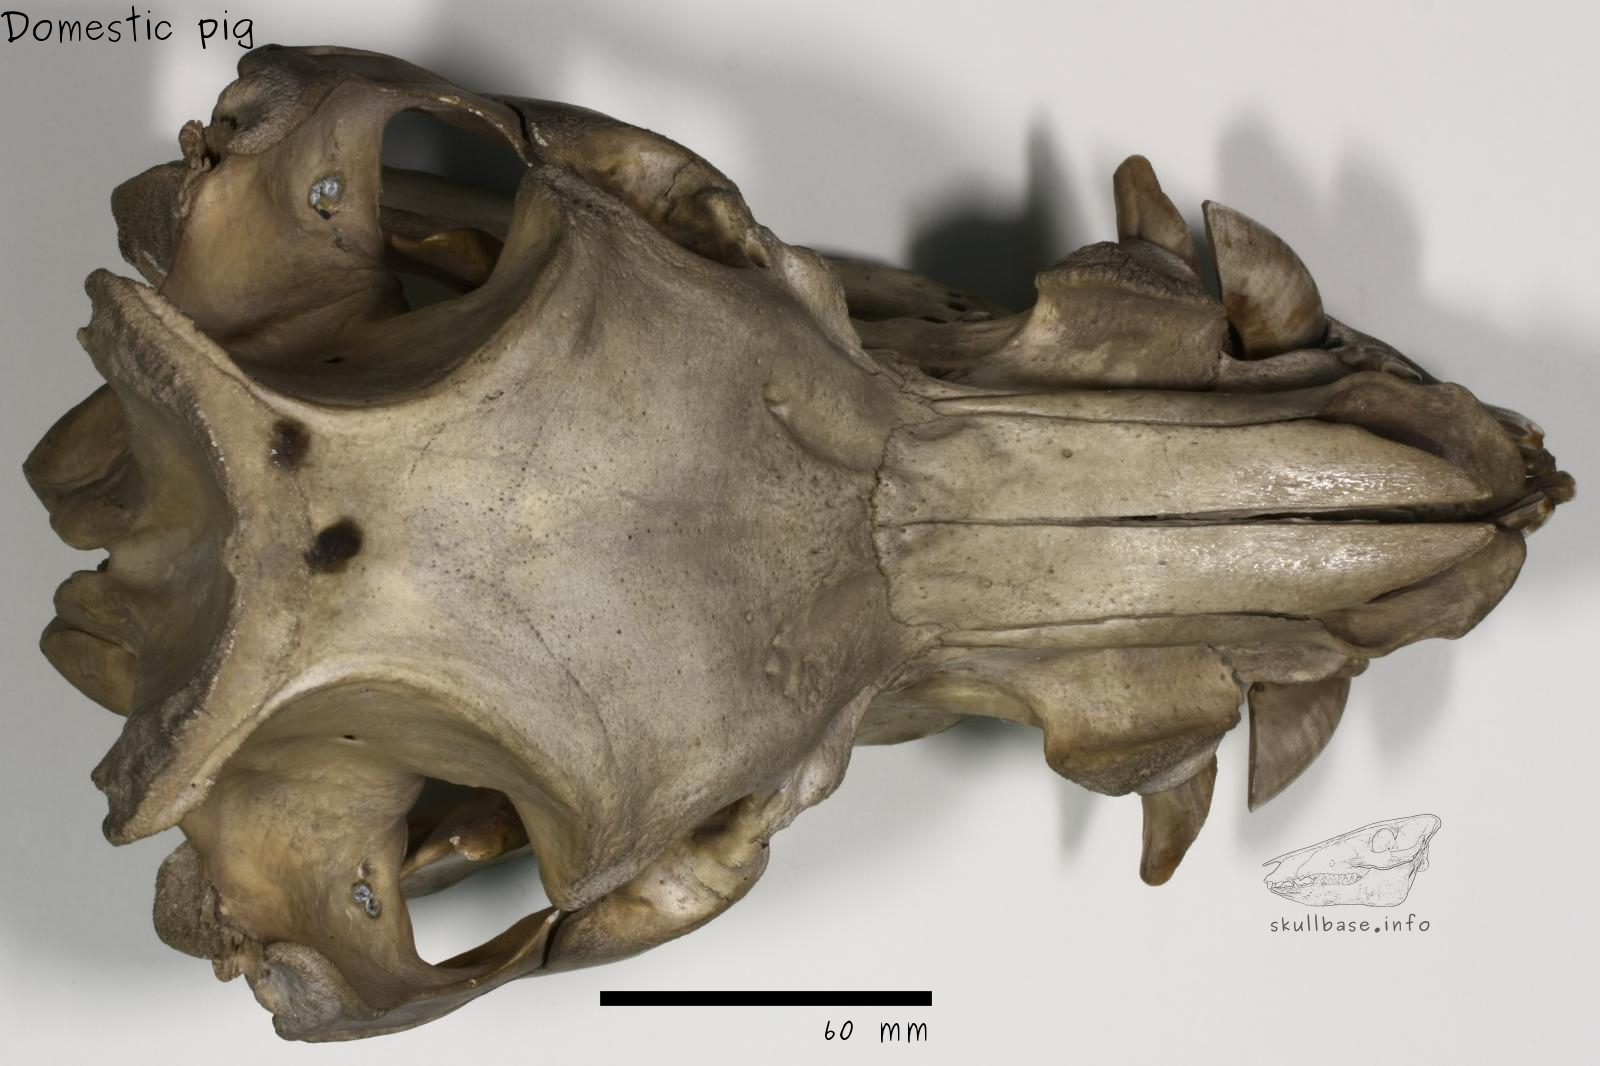 Domestic pig (Sus scrofa domesticus) skull dorsal view